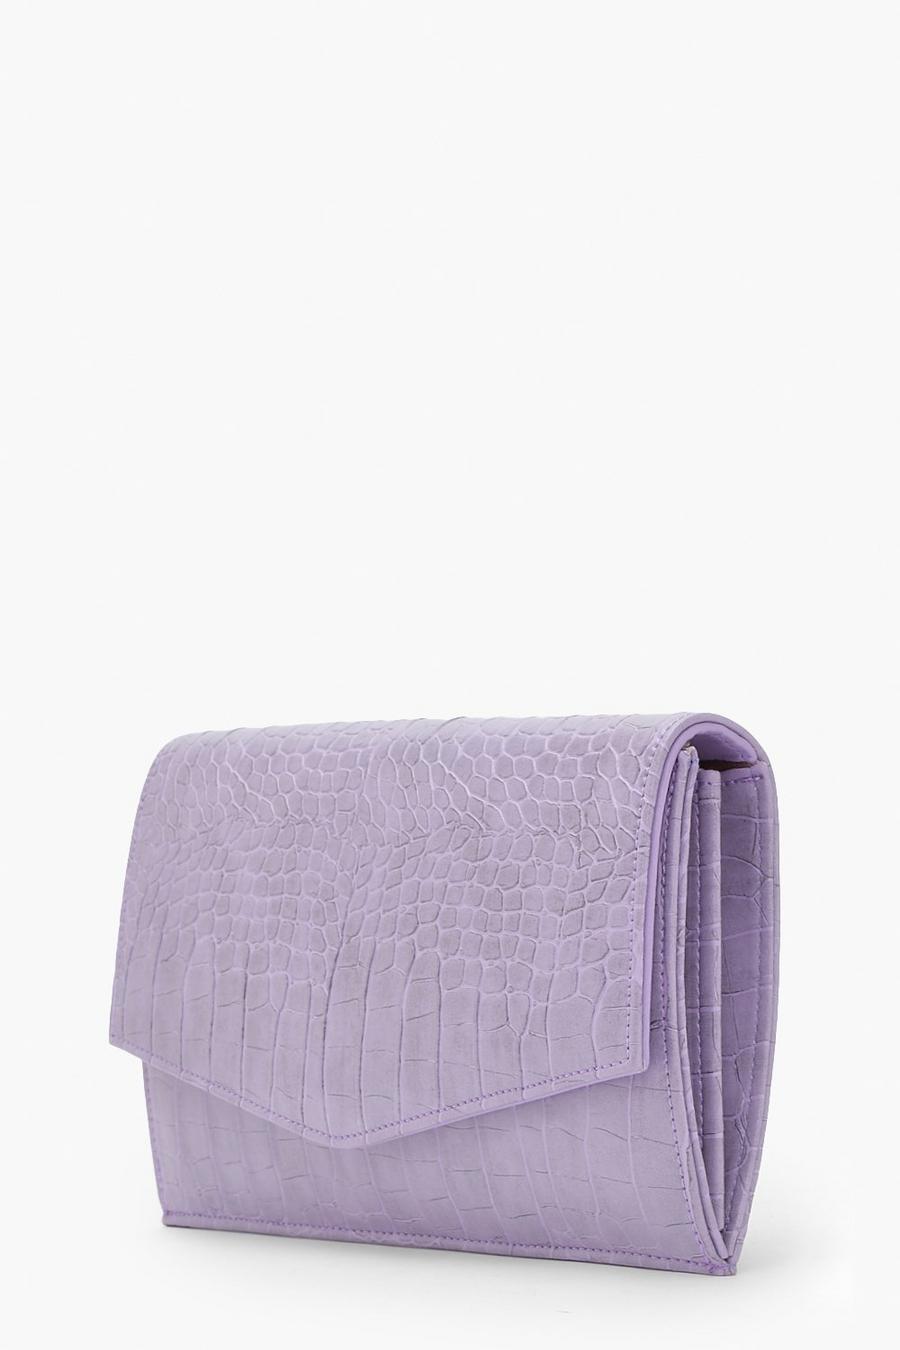 Petite pochette style enveloppe effet croco, Lilac purple